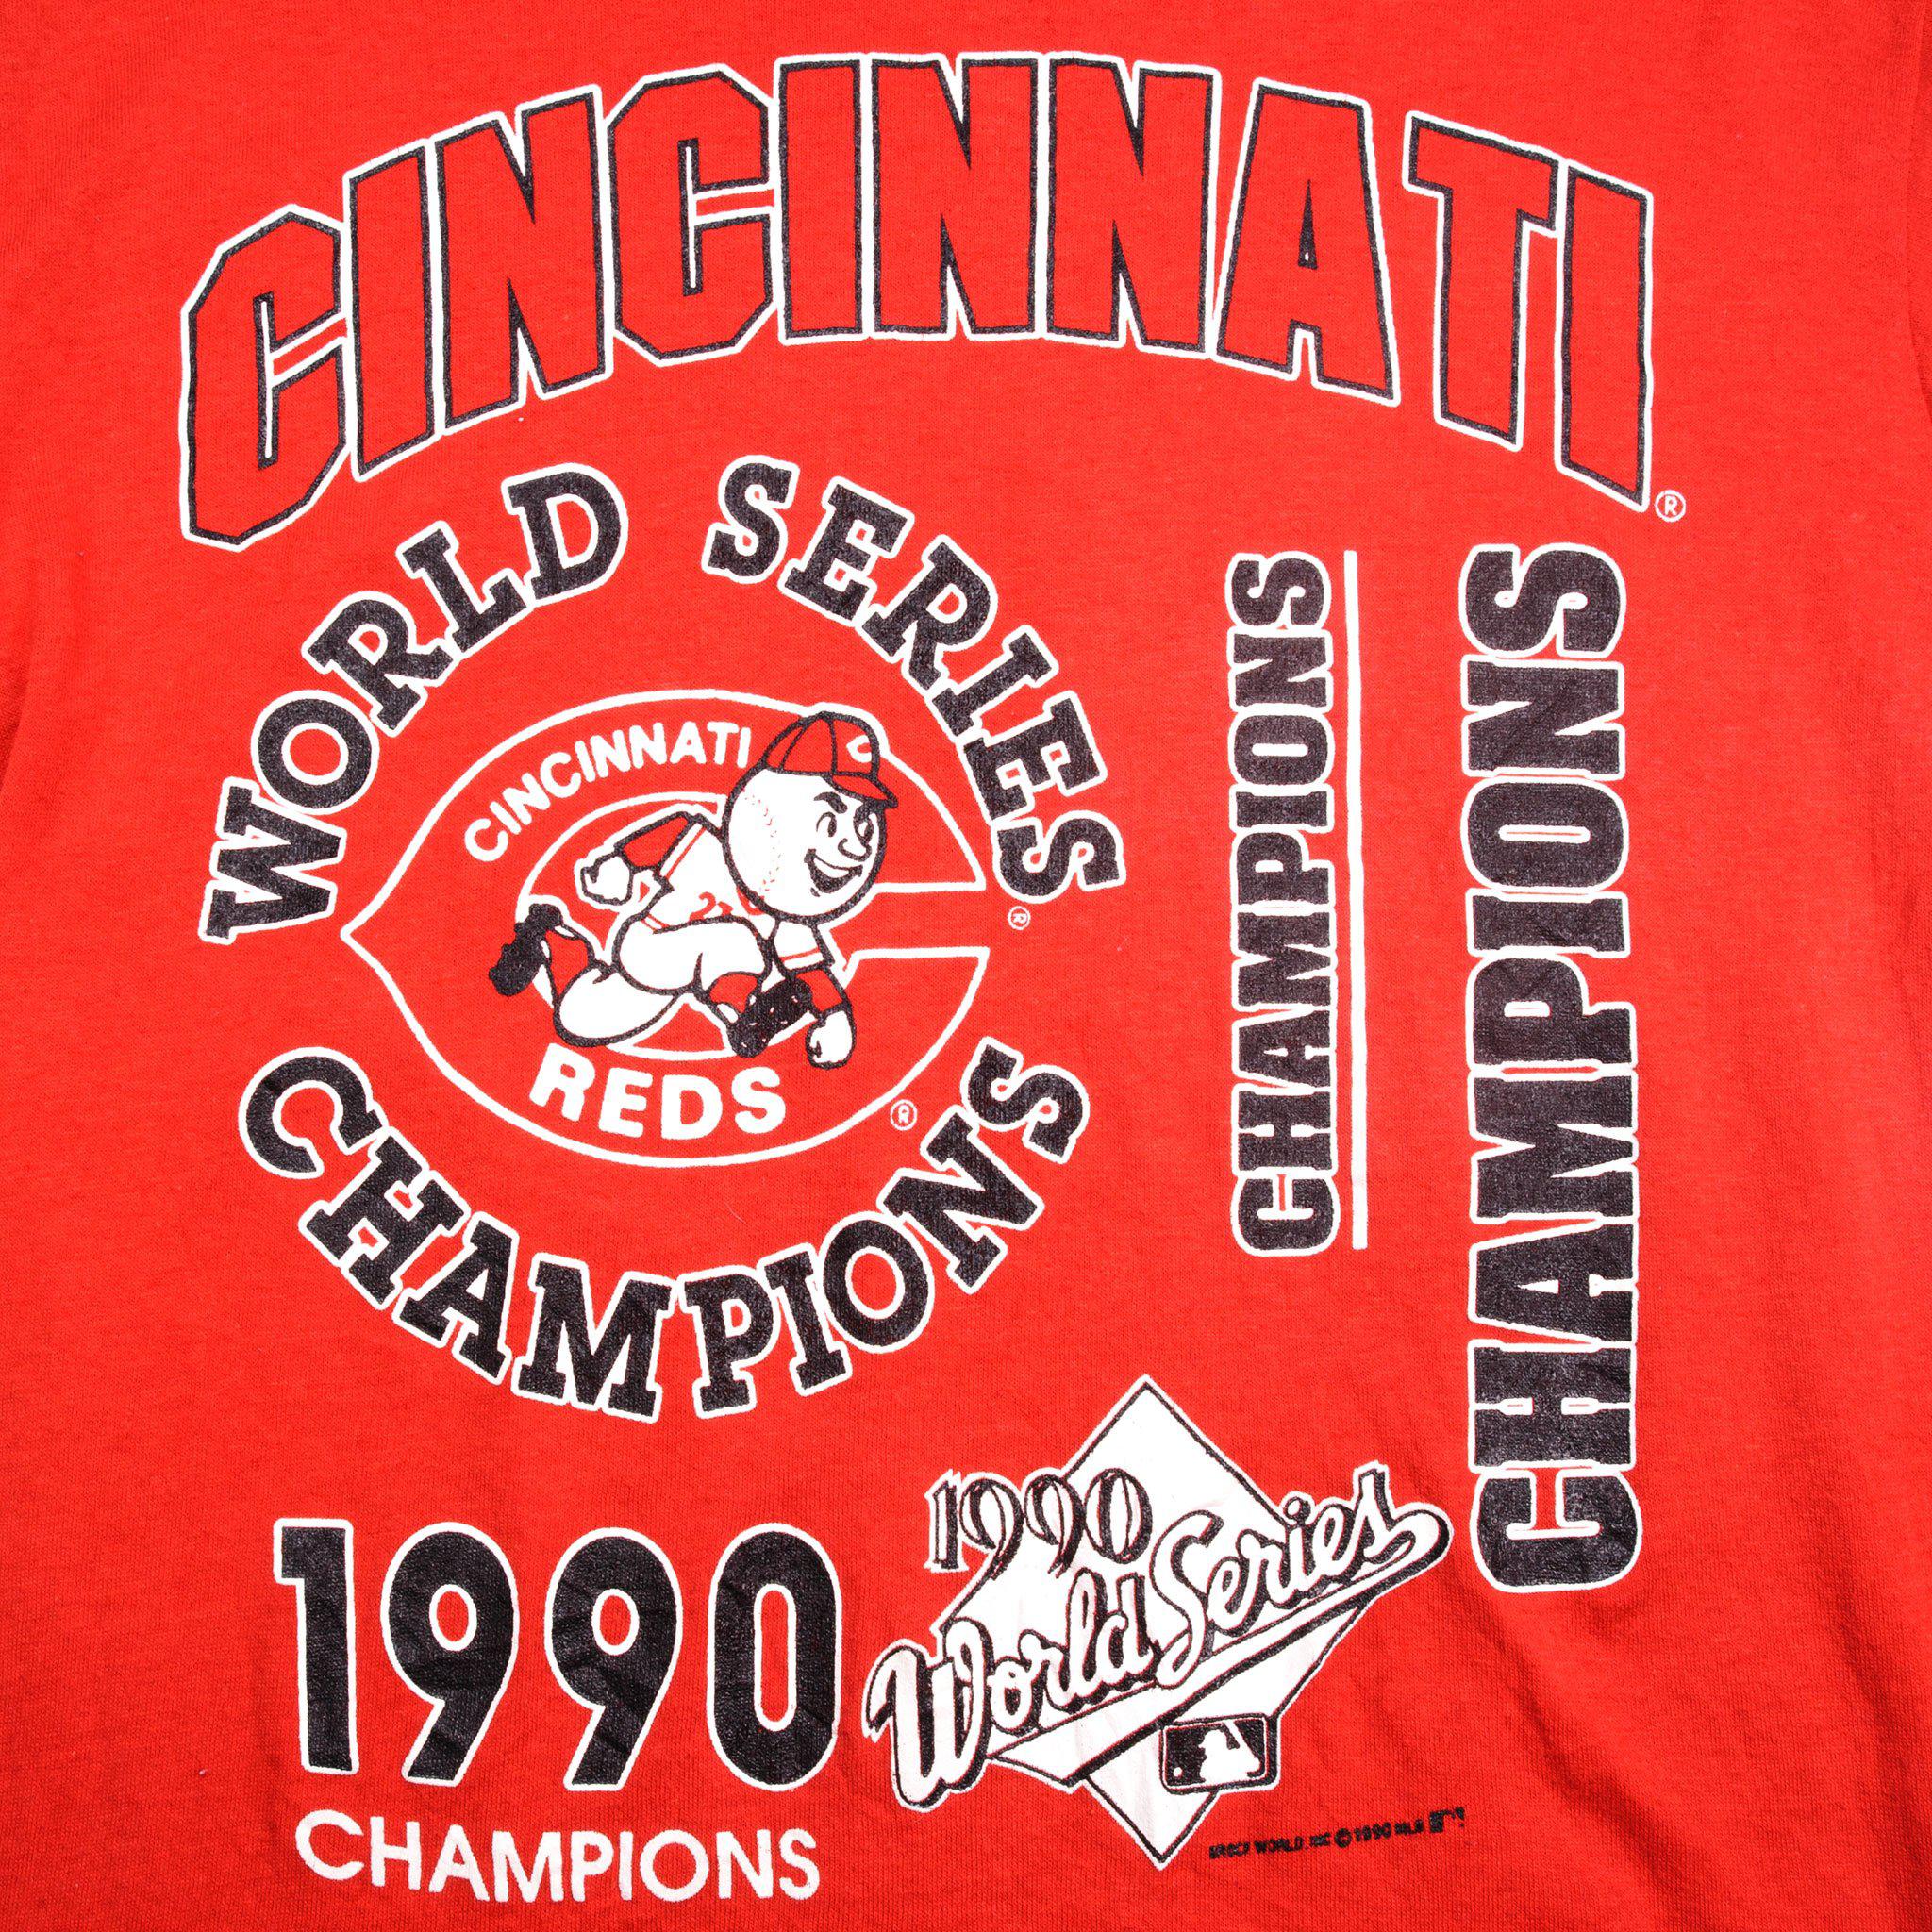 Photos: 1990 Reds World Series champions